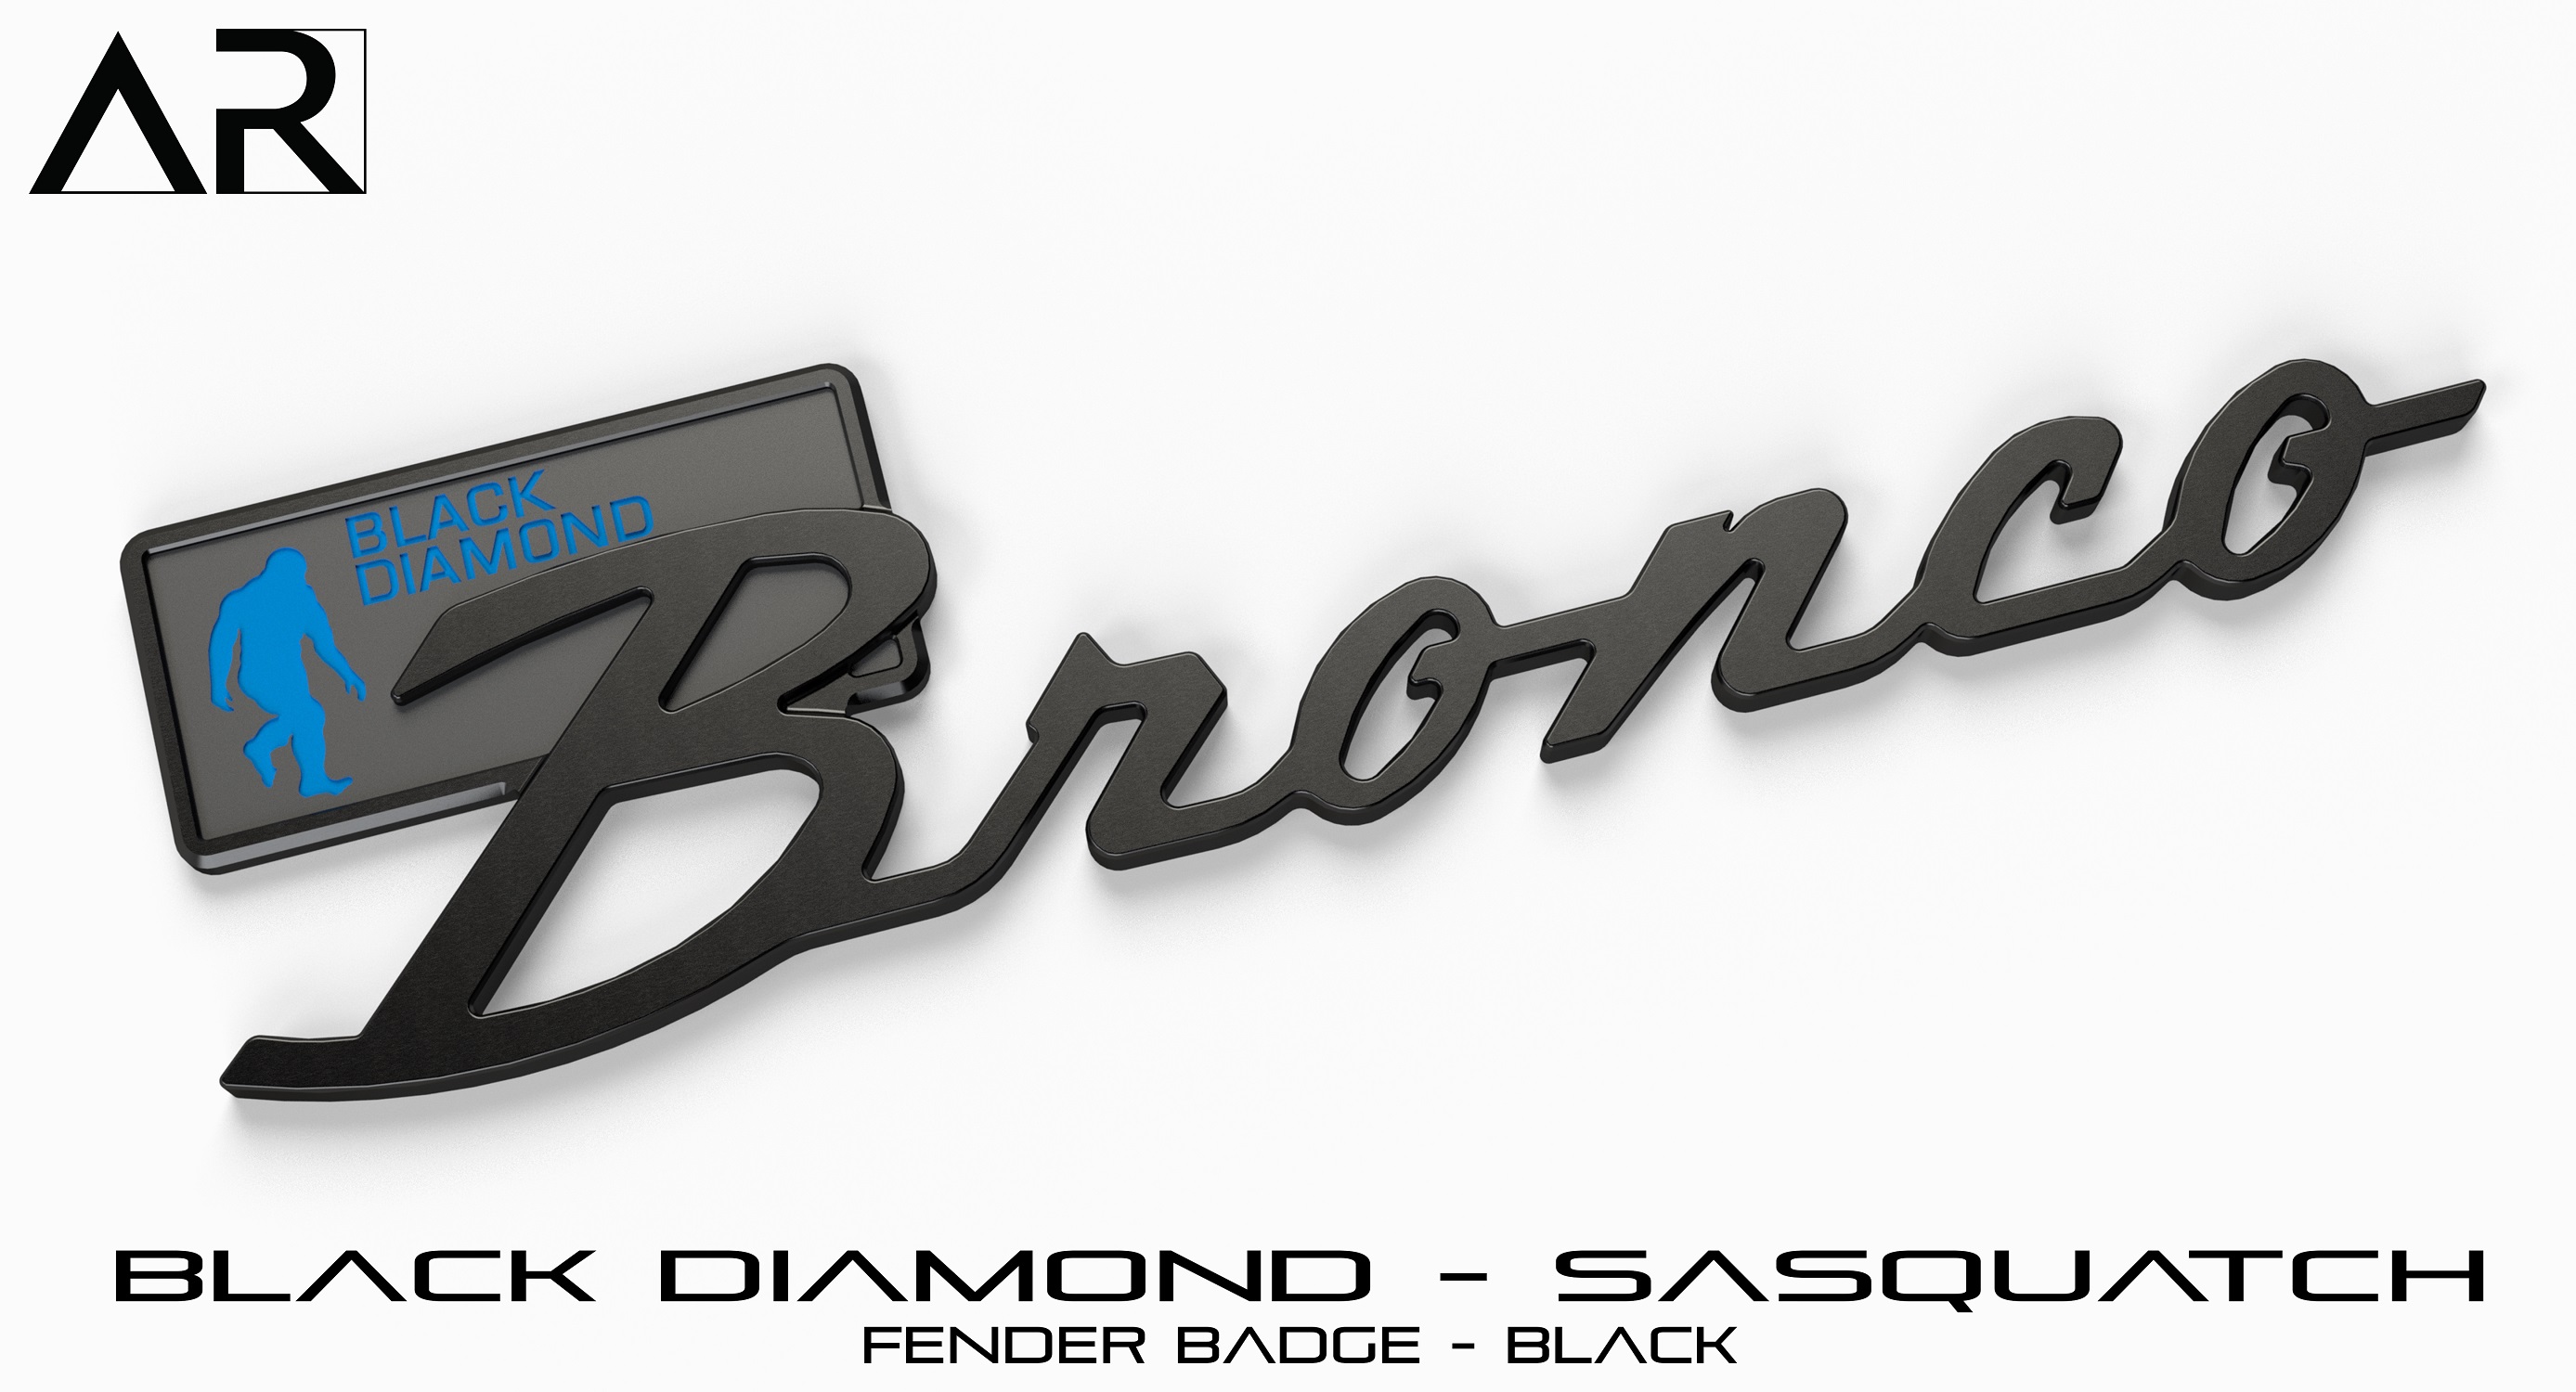 Ford Bronco AR | BRONCO CLASSIC DNA Fender Badge 1601008_S  - Fender Badge  - Black Diamond Sasquatch - Black